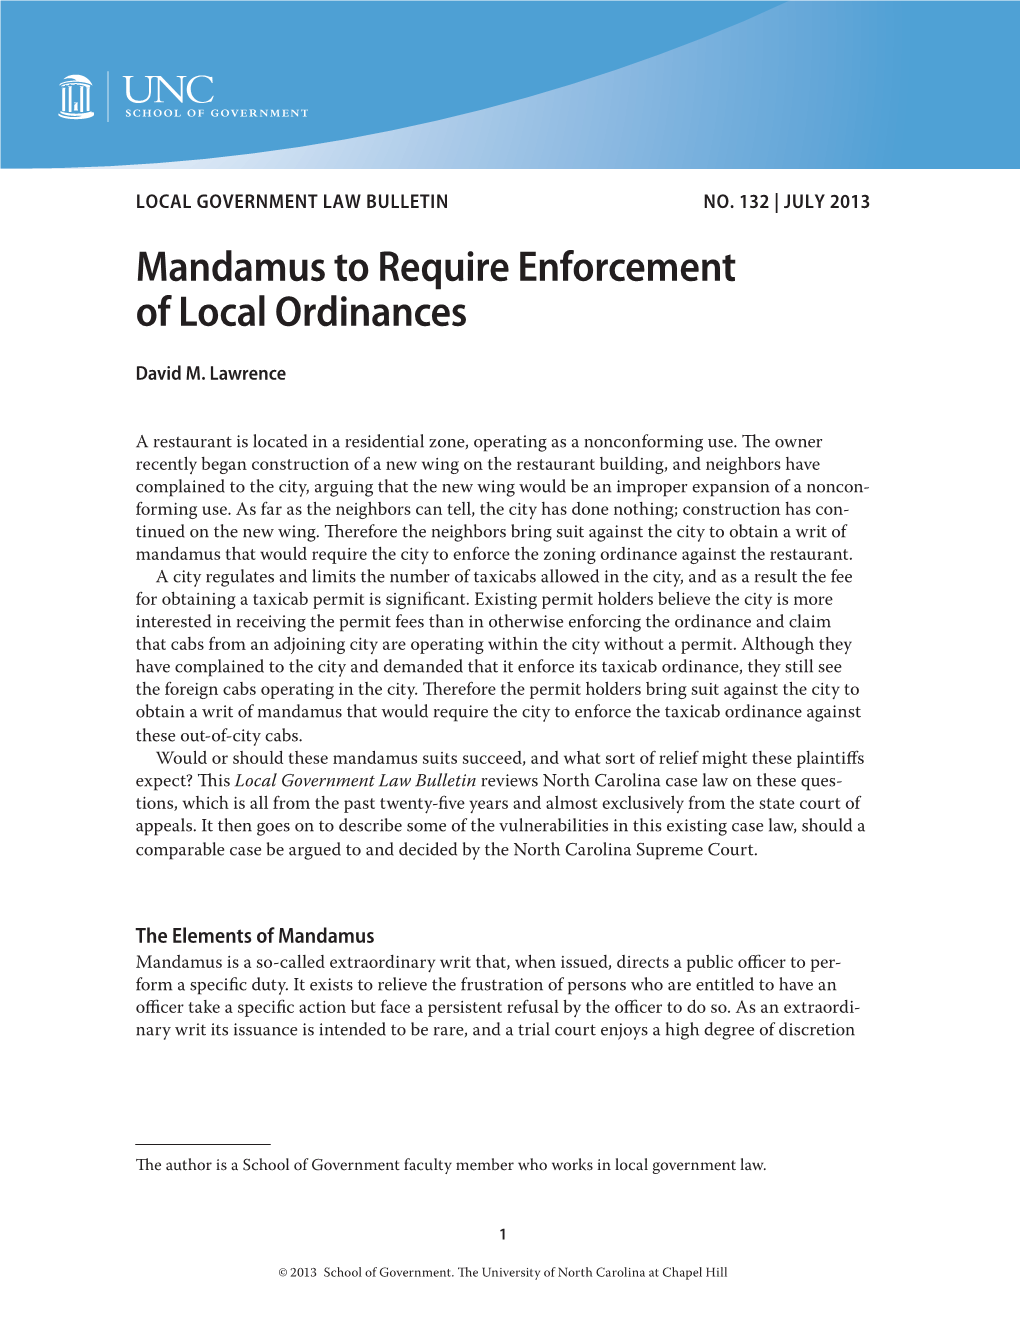 Mandamus to Require Enforcement of Local Ordinances